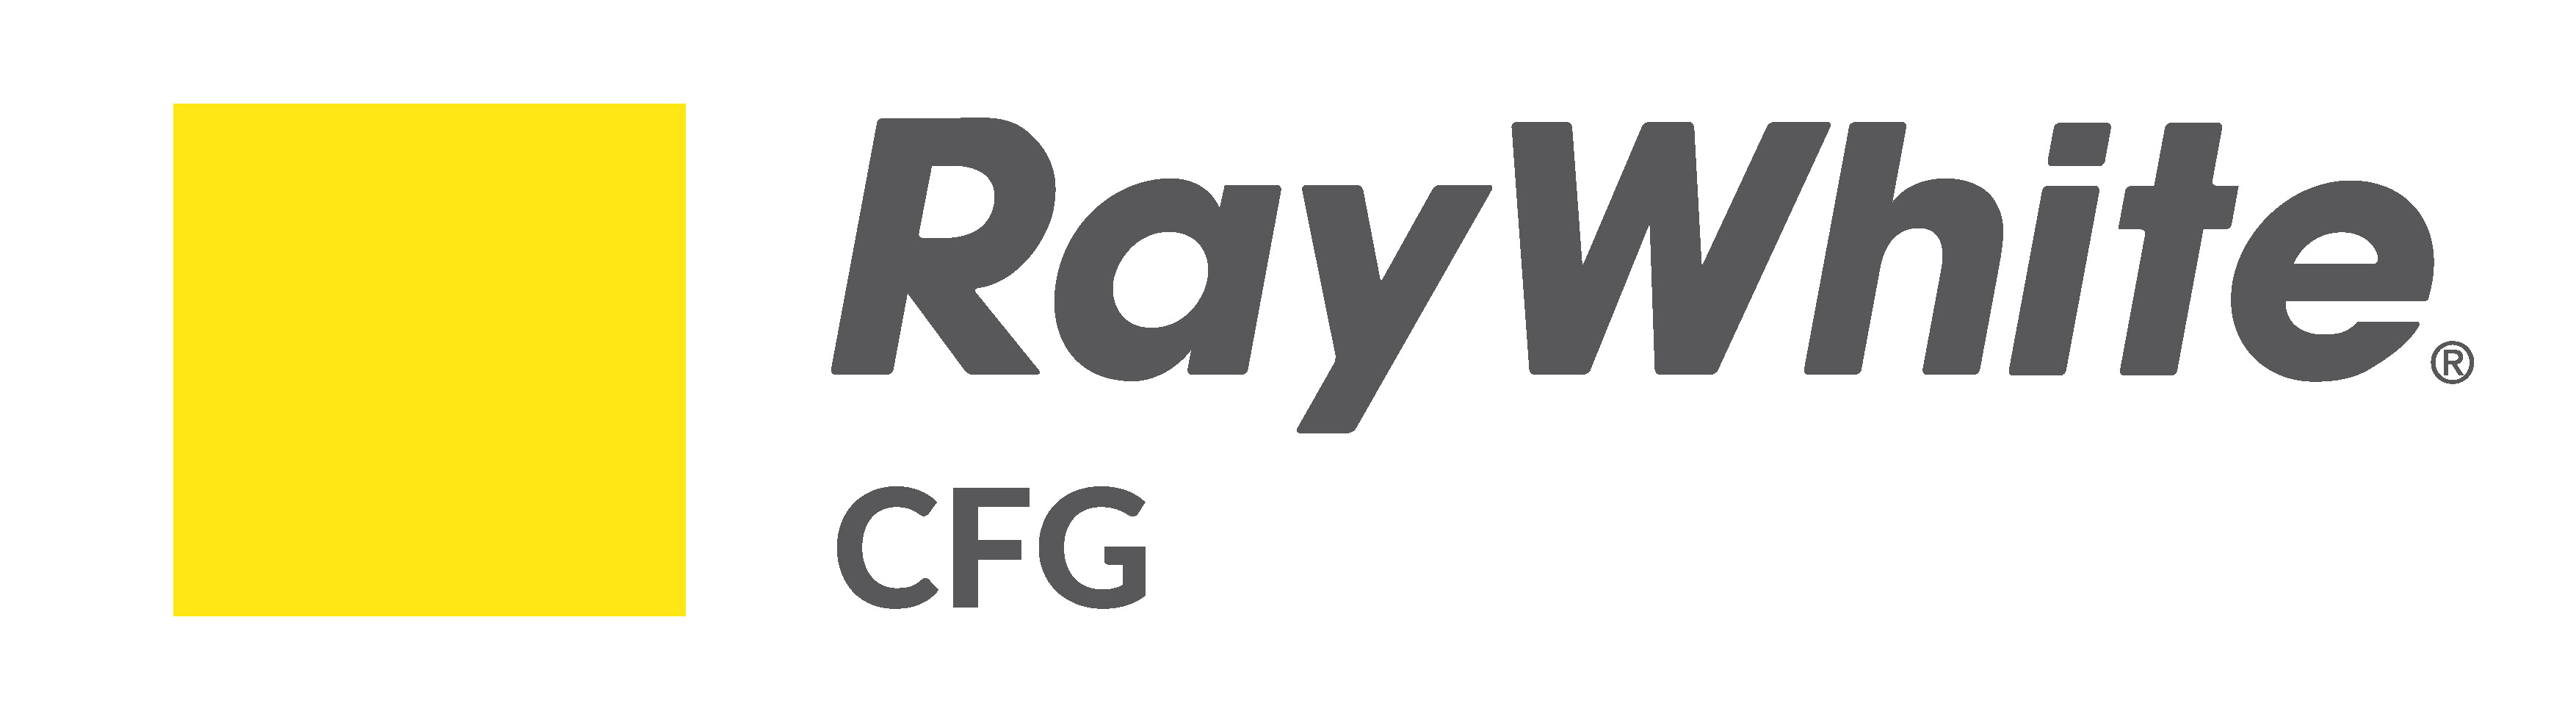 Ray White CFG Logo.jpg